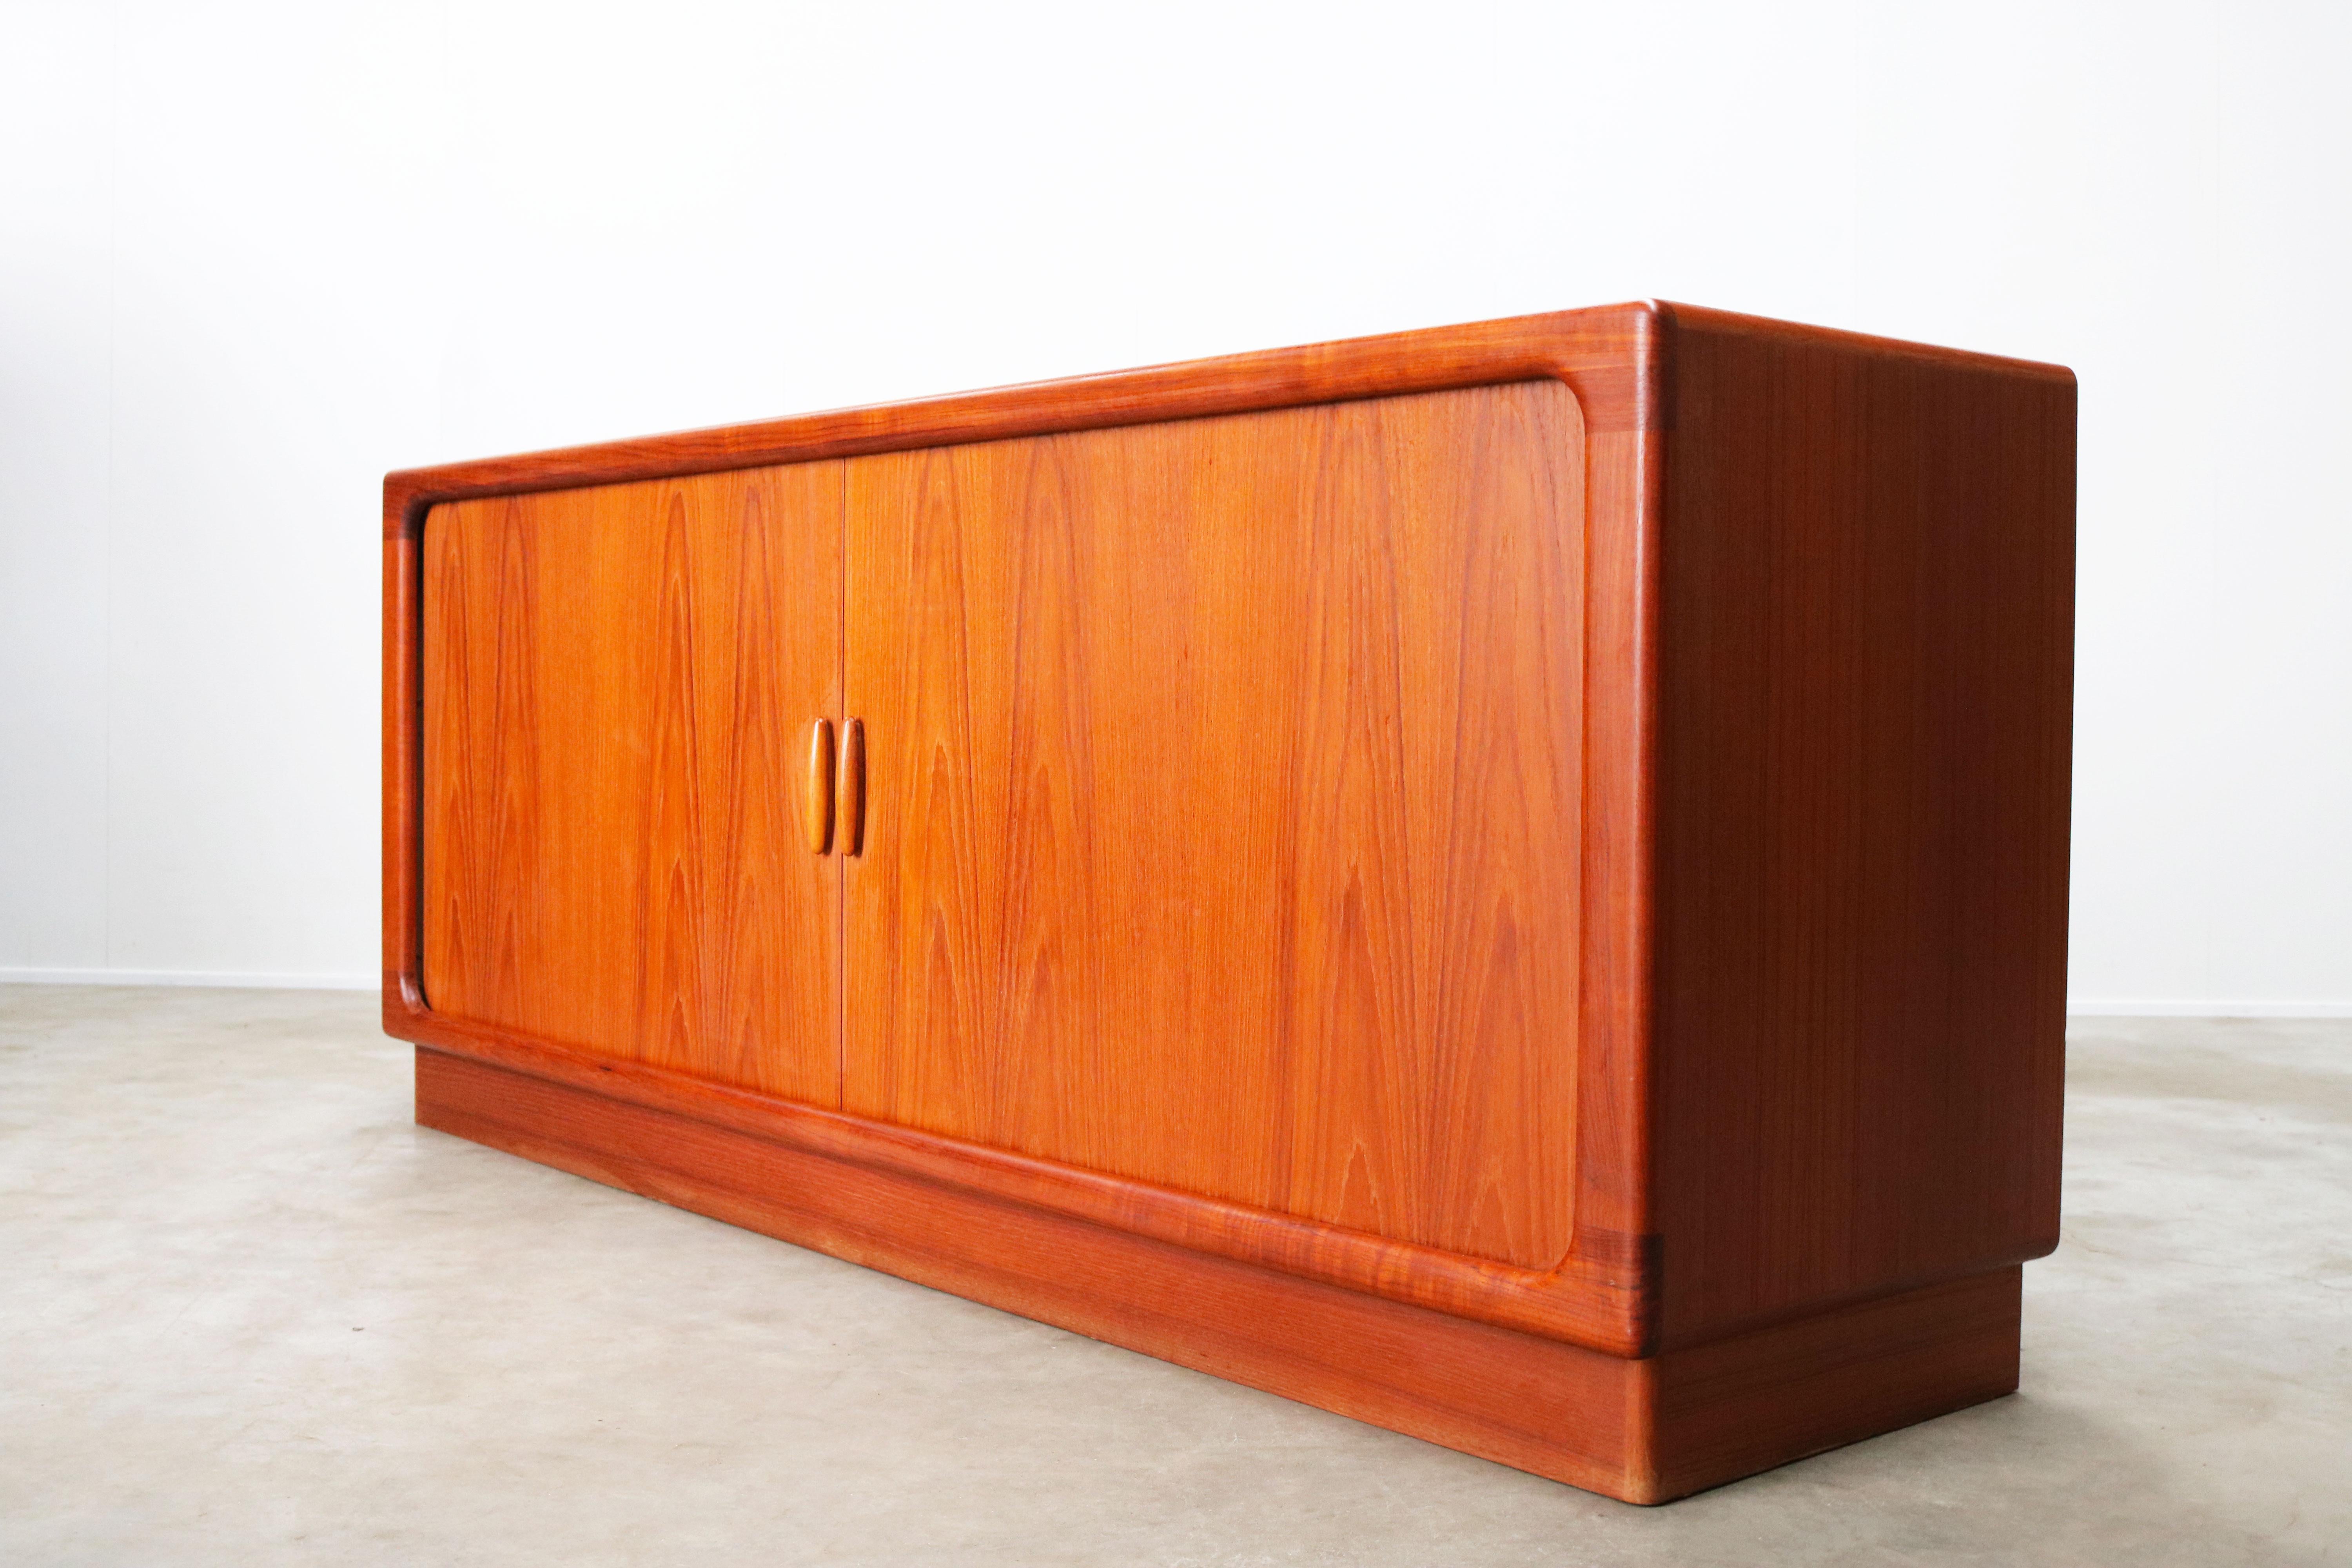 Danish Design Credenza / Sideboard by Dyrlund 1950s Teak Organic Tambour Doors 12